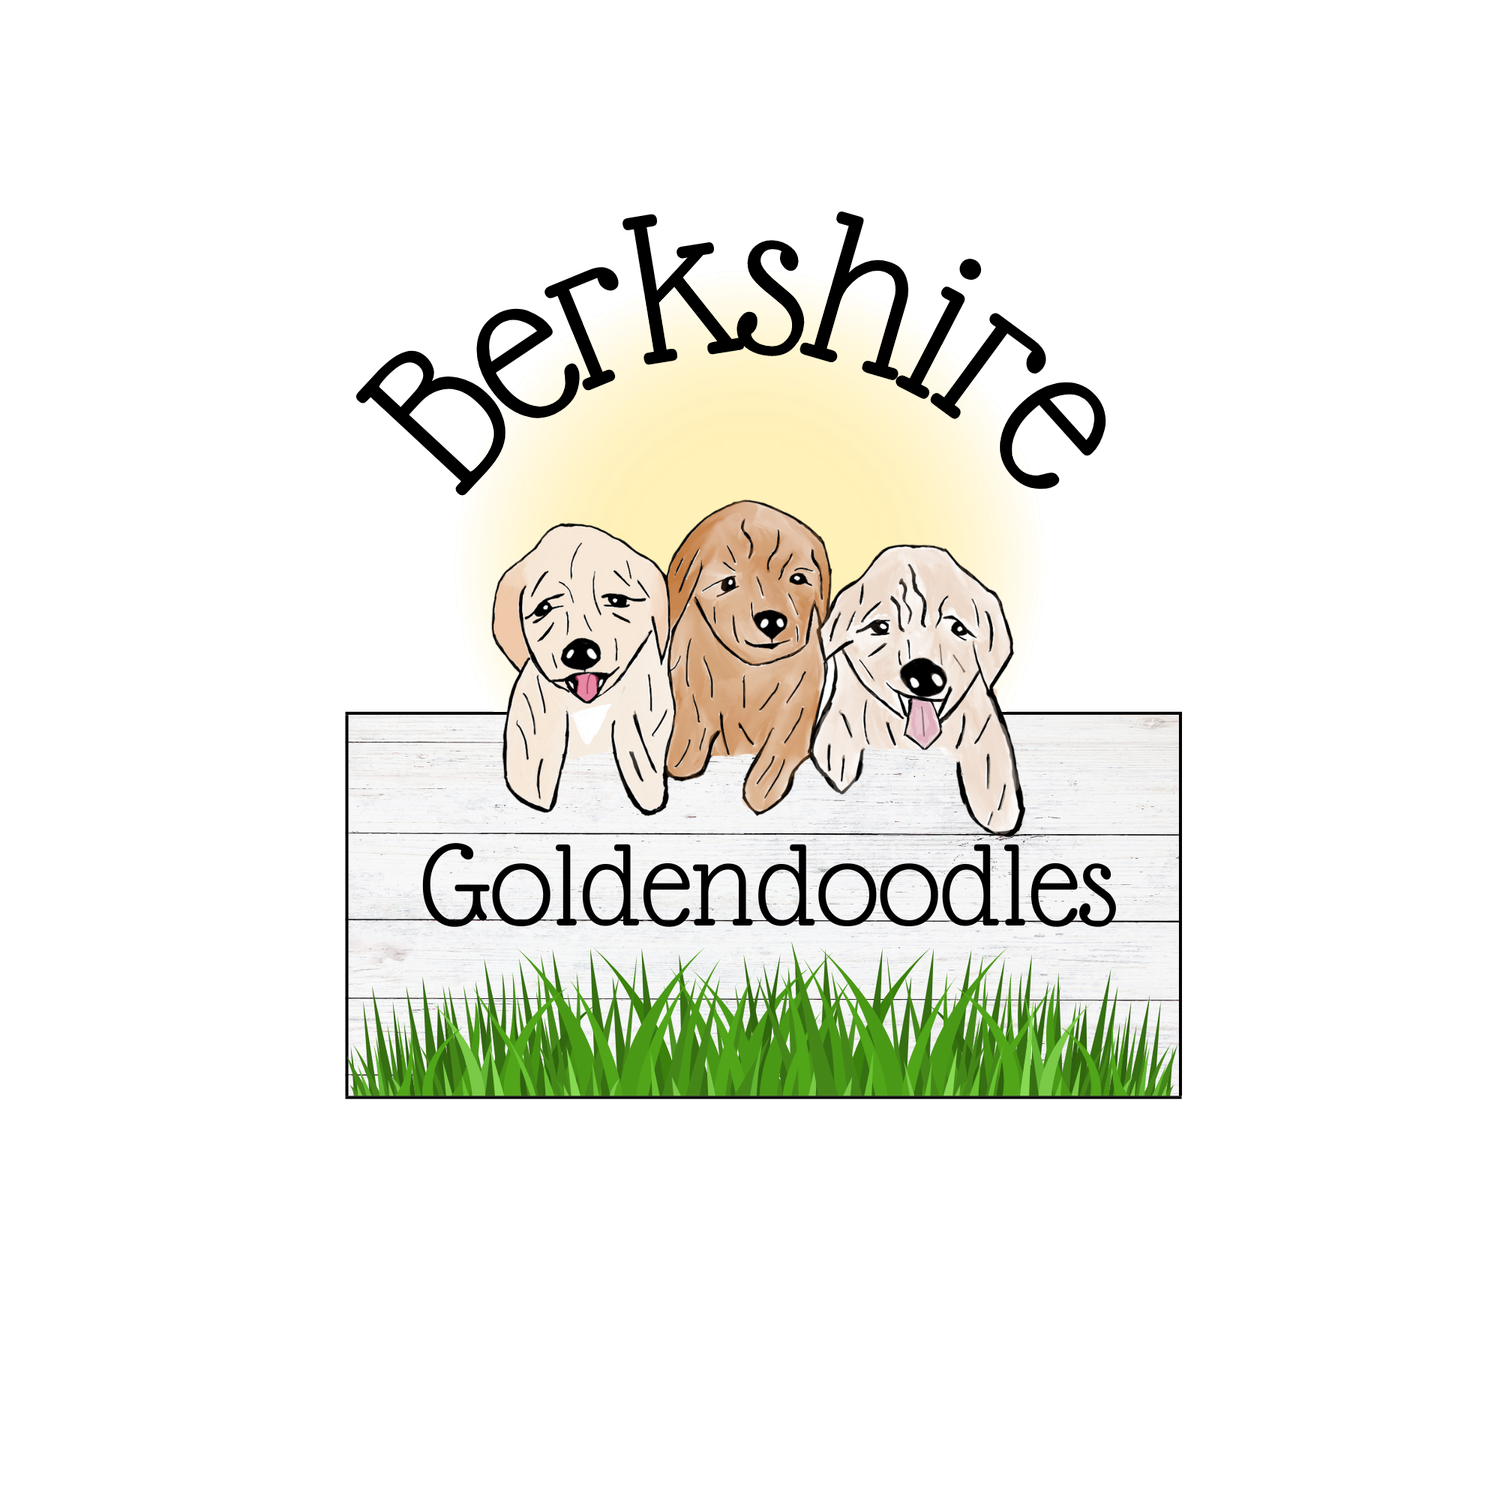 Berkshire Goldendoodles